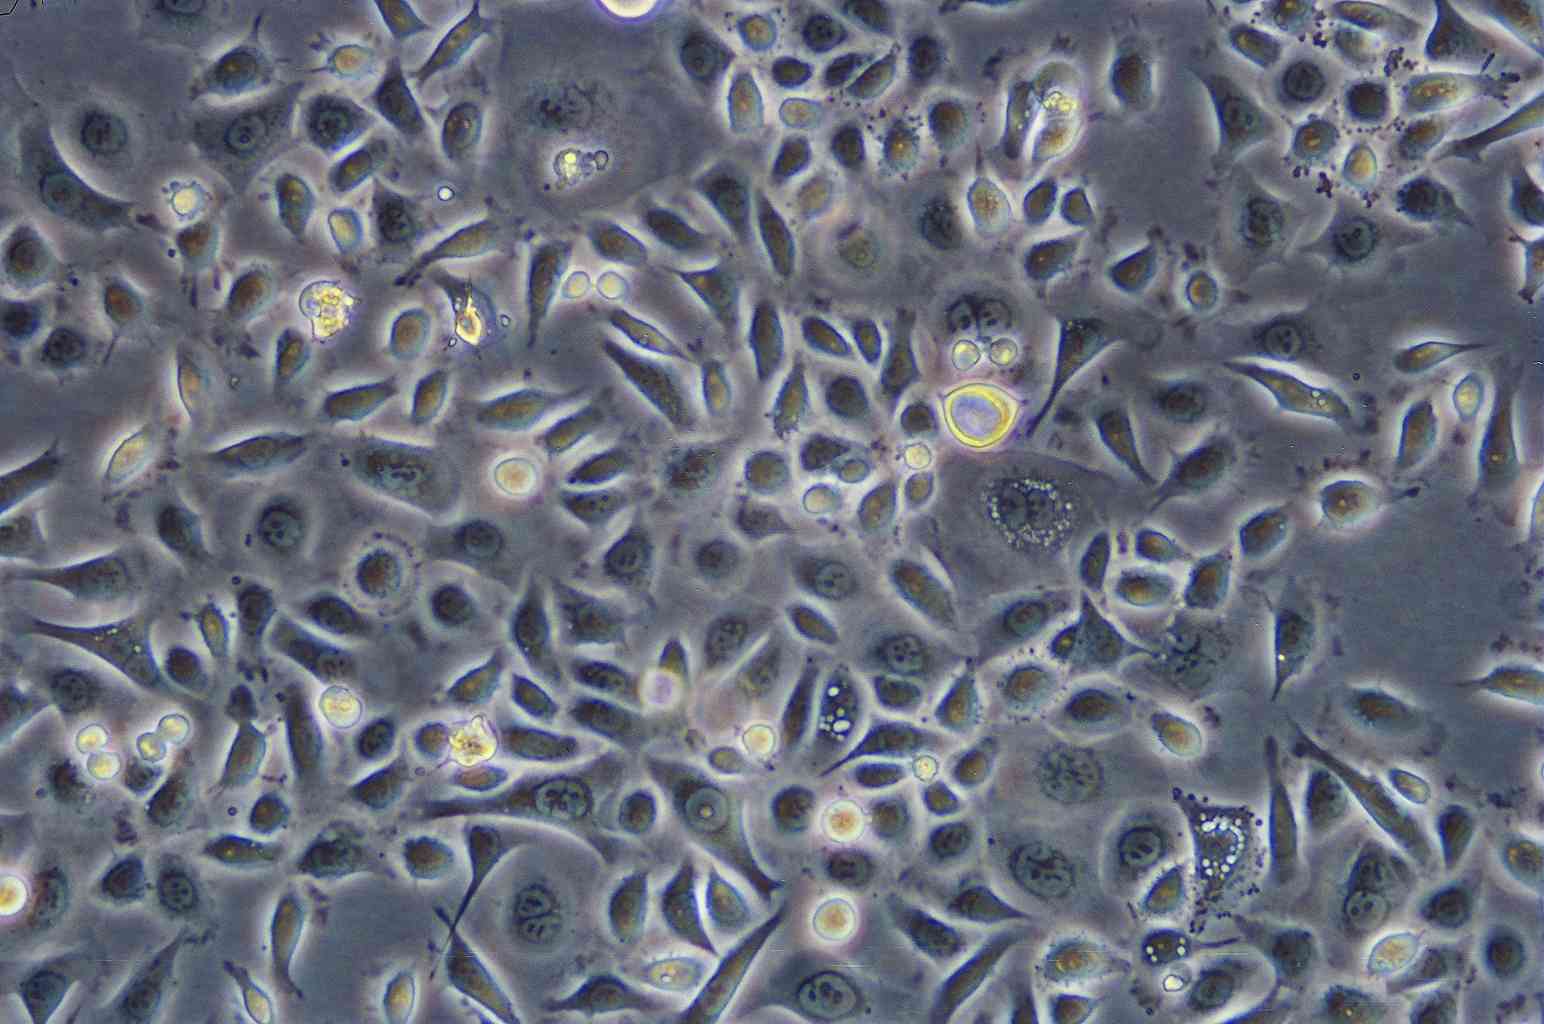 HCA7 Cells|人结肠腺癌克隆细胞(包送STR鉴定报告),HCA7 Cells